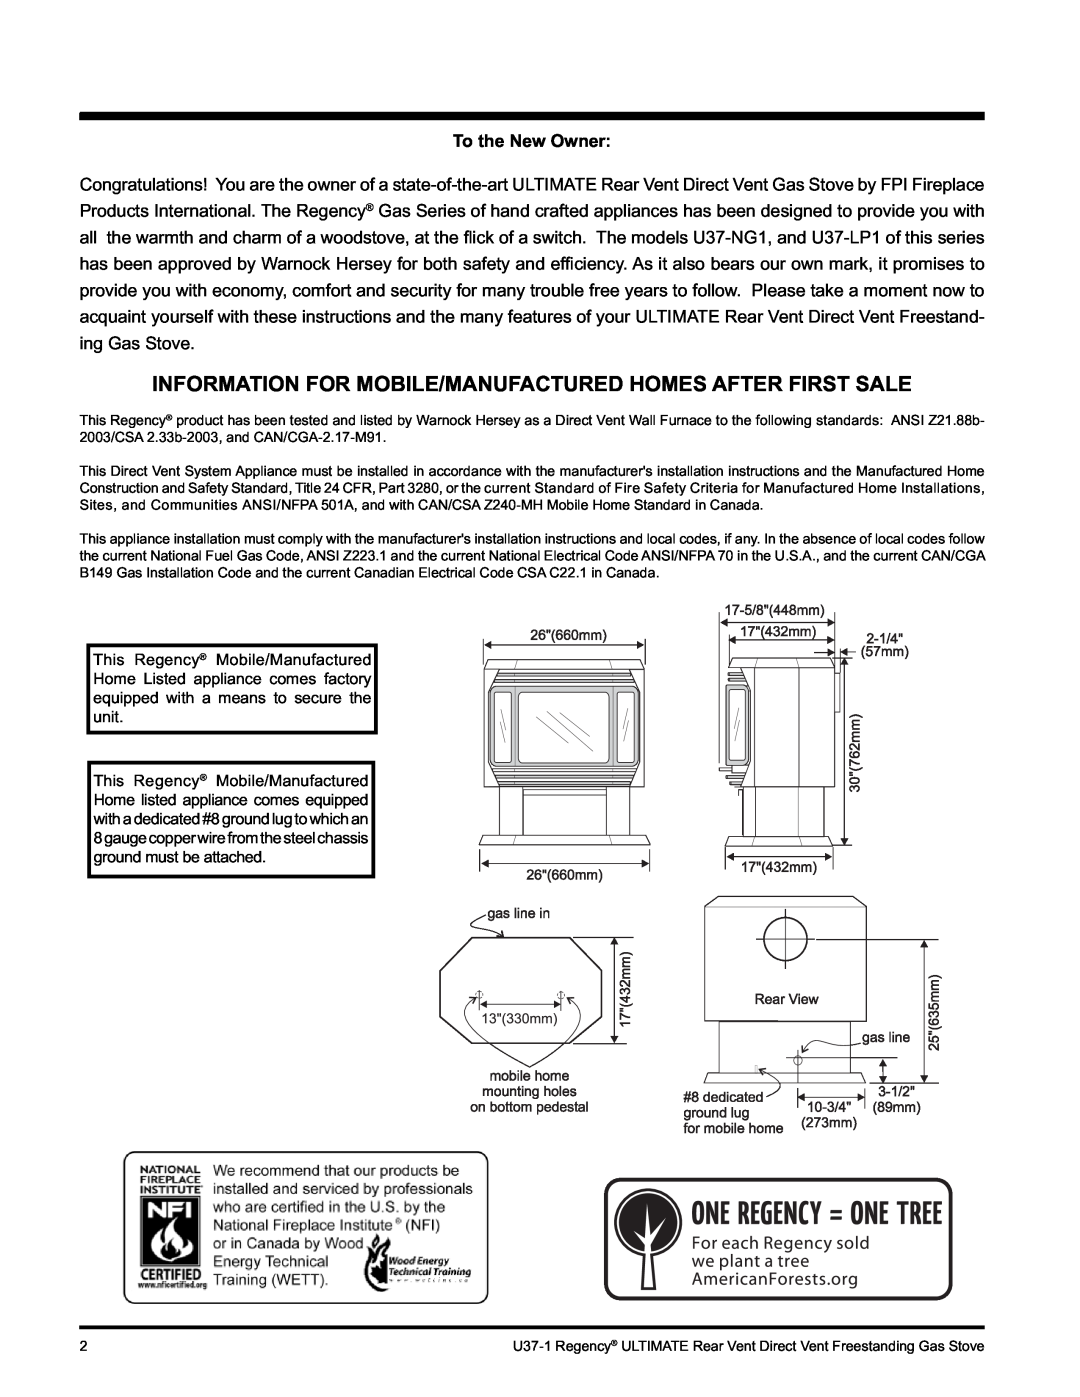 Regency U37-LP1, U37-NG1 installation manual To the New Owner 